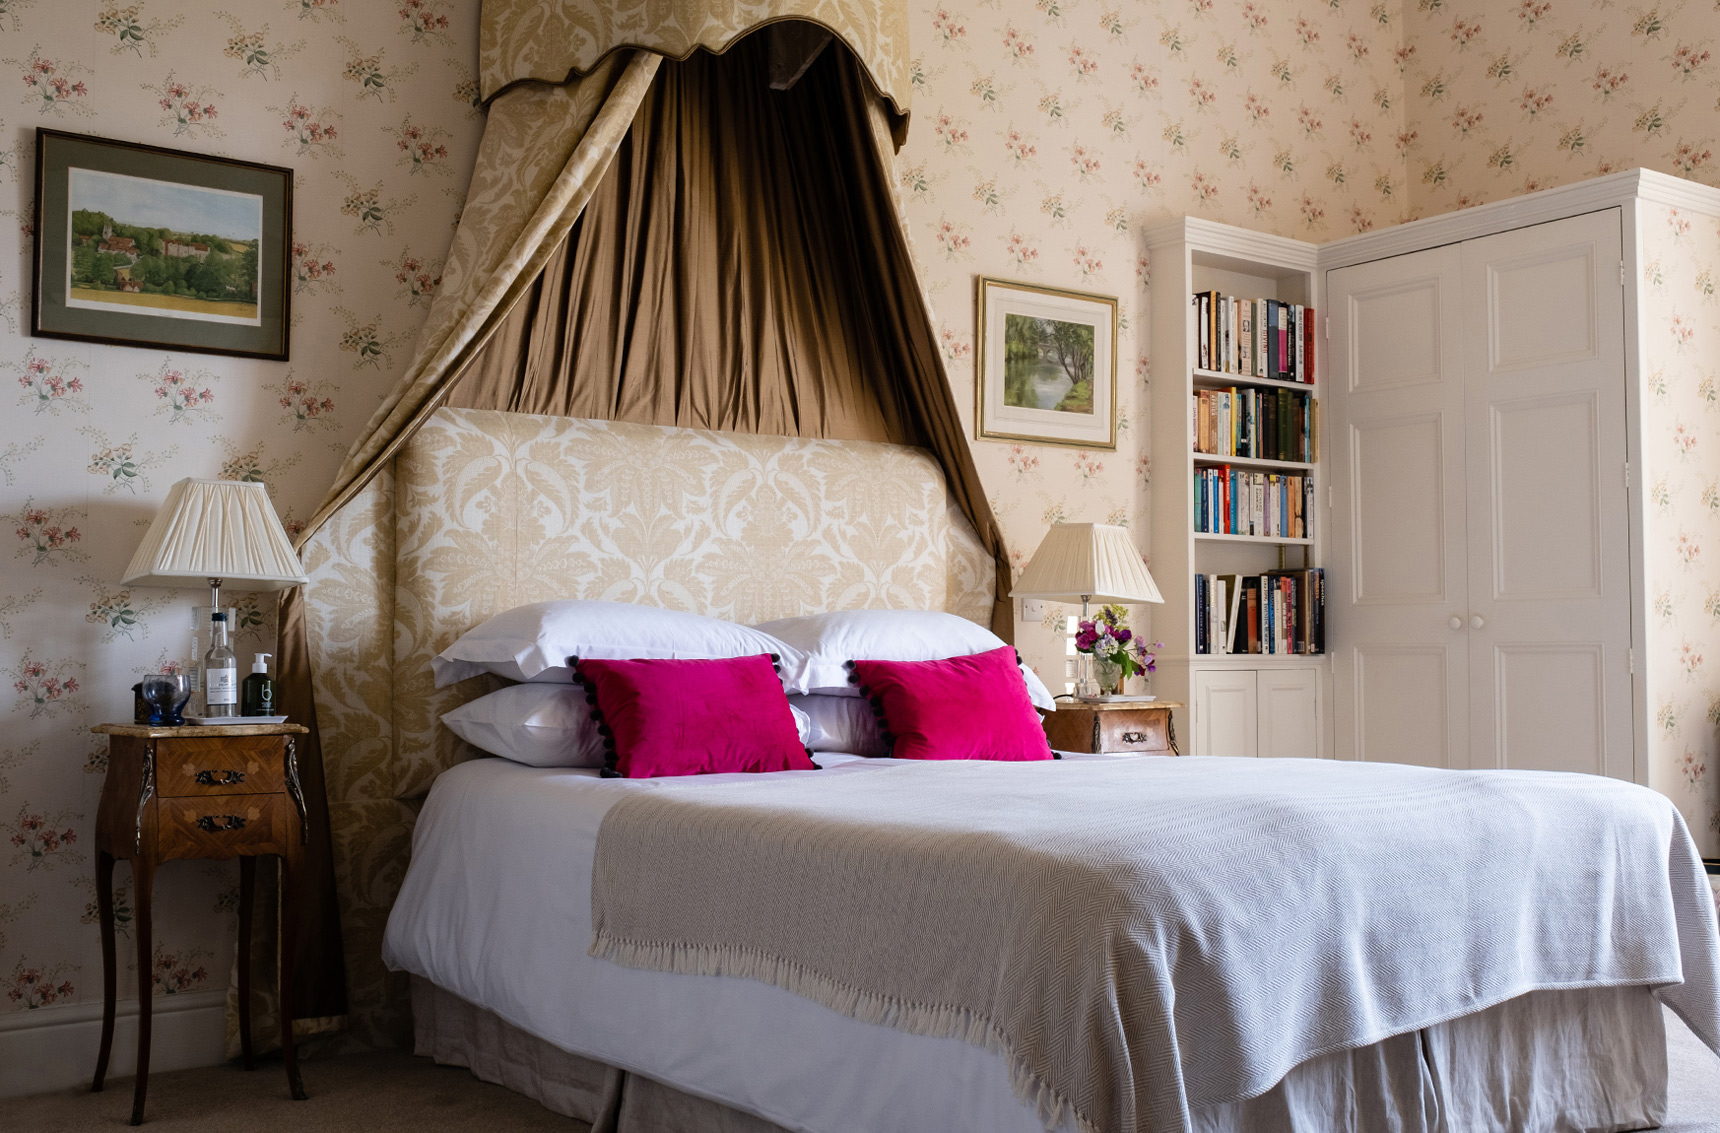 The Lincoln Bedroom at Kirtlington Park